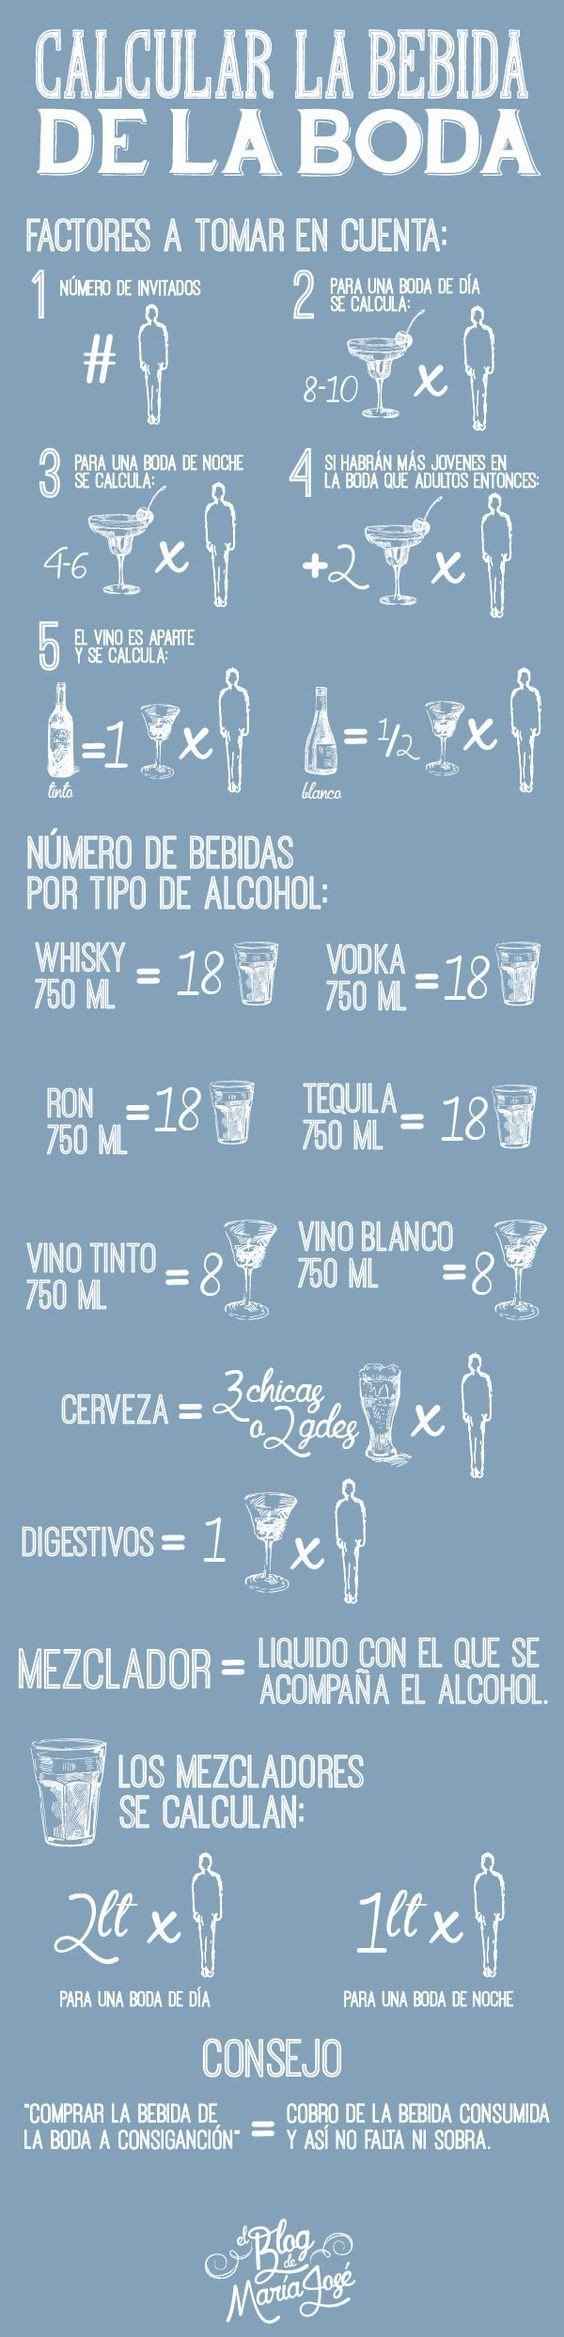 cálculo de alcohol